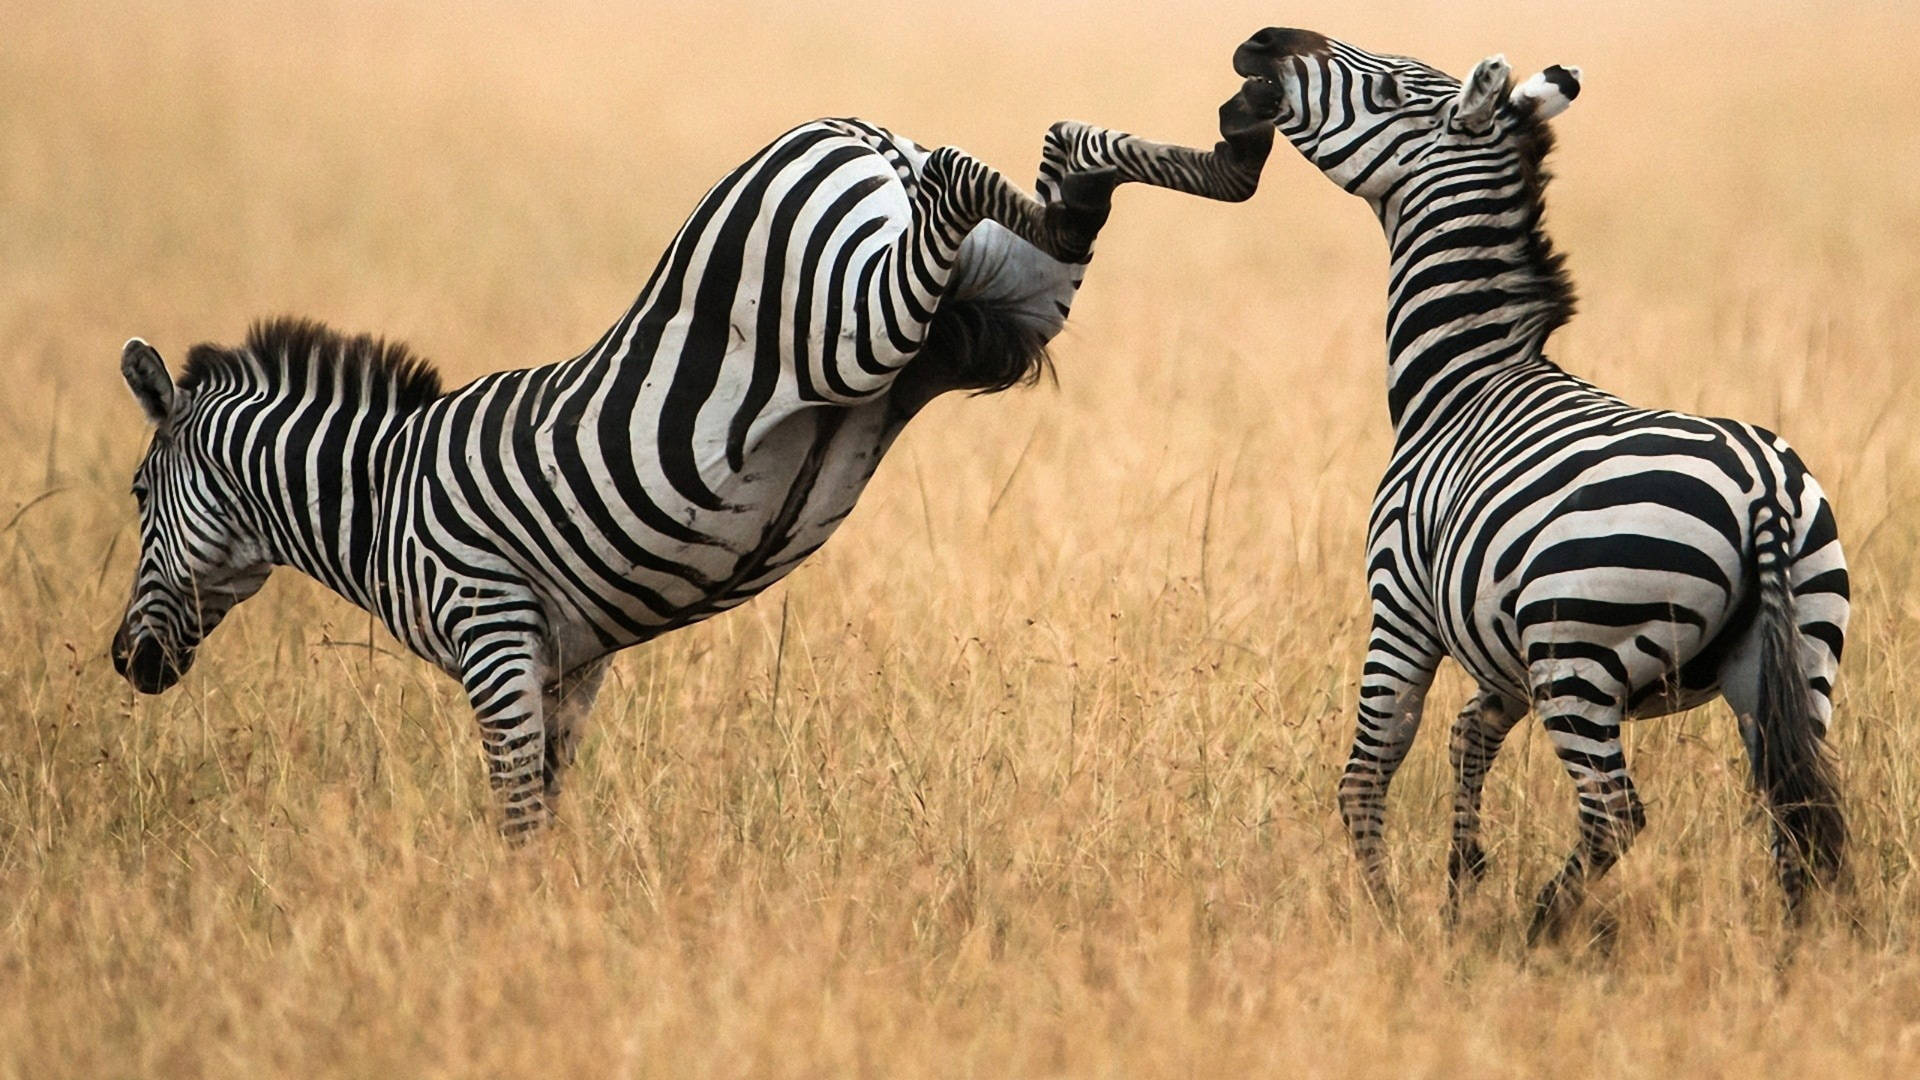 Two Zebras Fighting Background